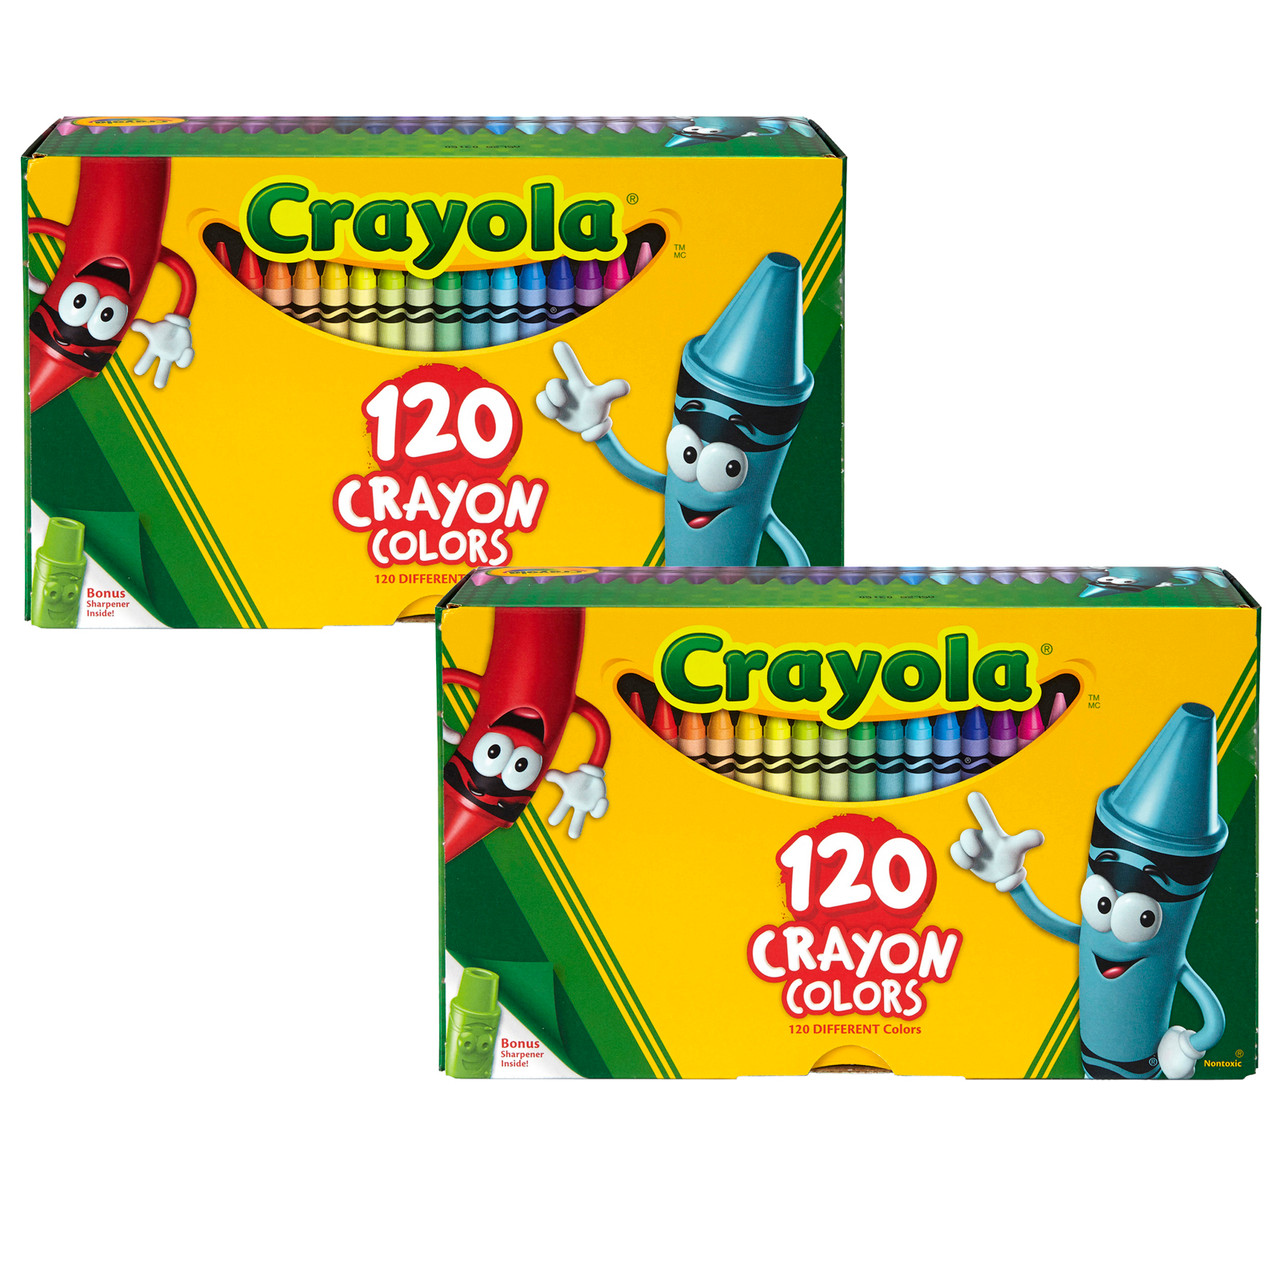 Crayola® White Chalk - 8 Boxes - 96 Sticks